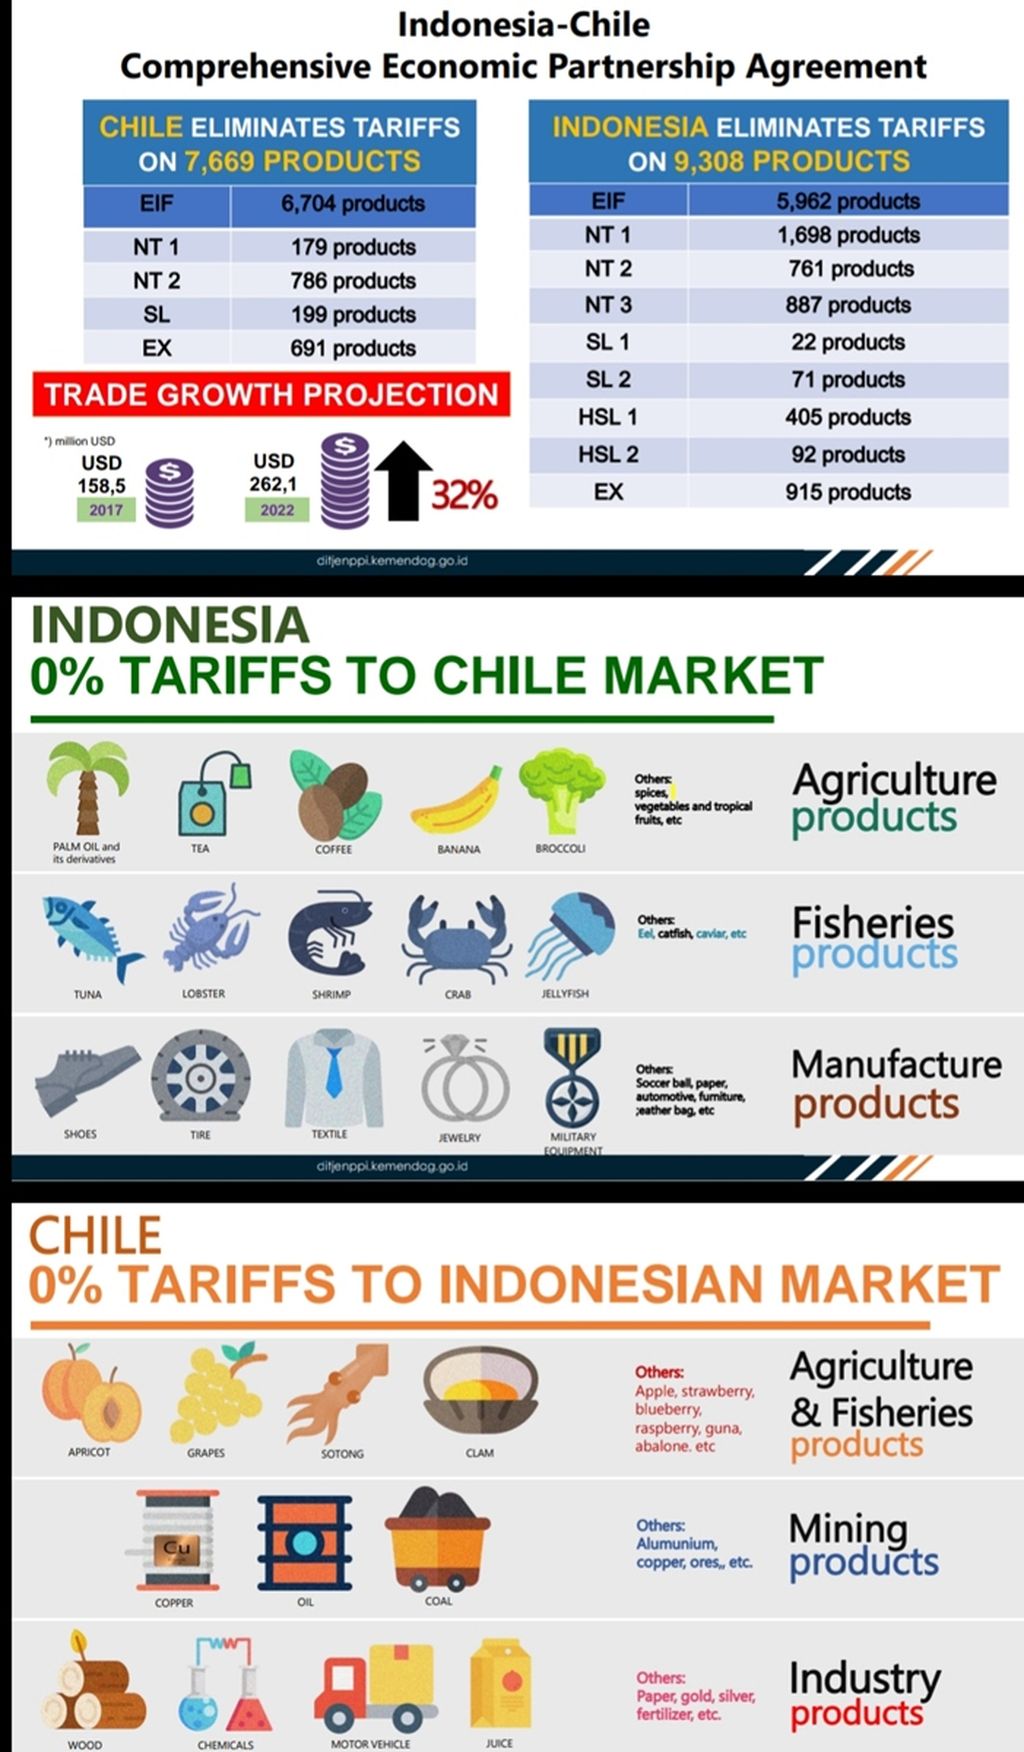 Paparan Direktorat Jenderal Perjanjian Perdagangan Internasional Kementerian Perdagangan terkait Perjanjian Kemitraan Ekonomi Komprehensif Indonesia-Chile atau IC-CEPA